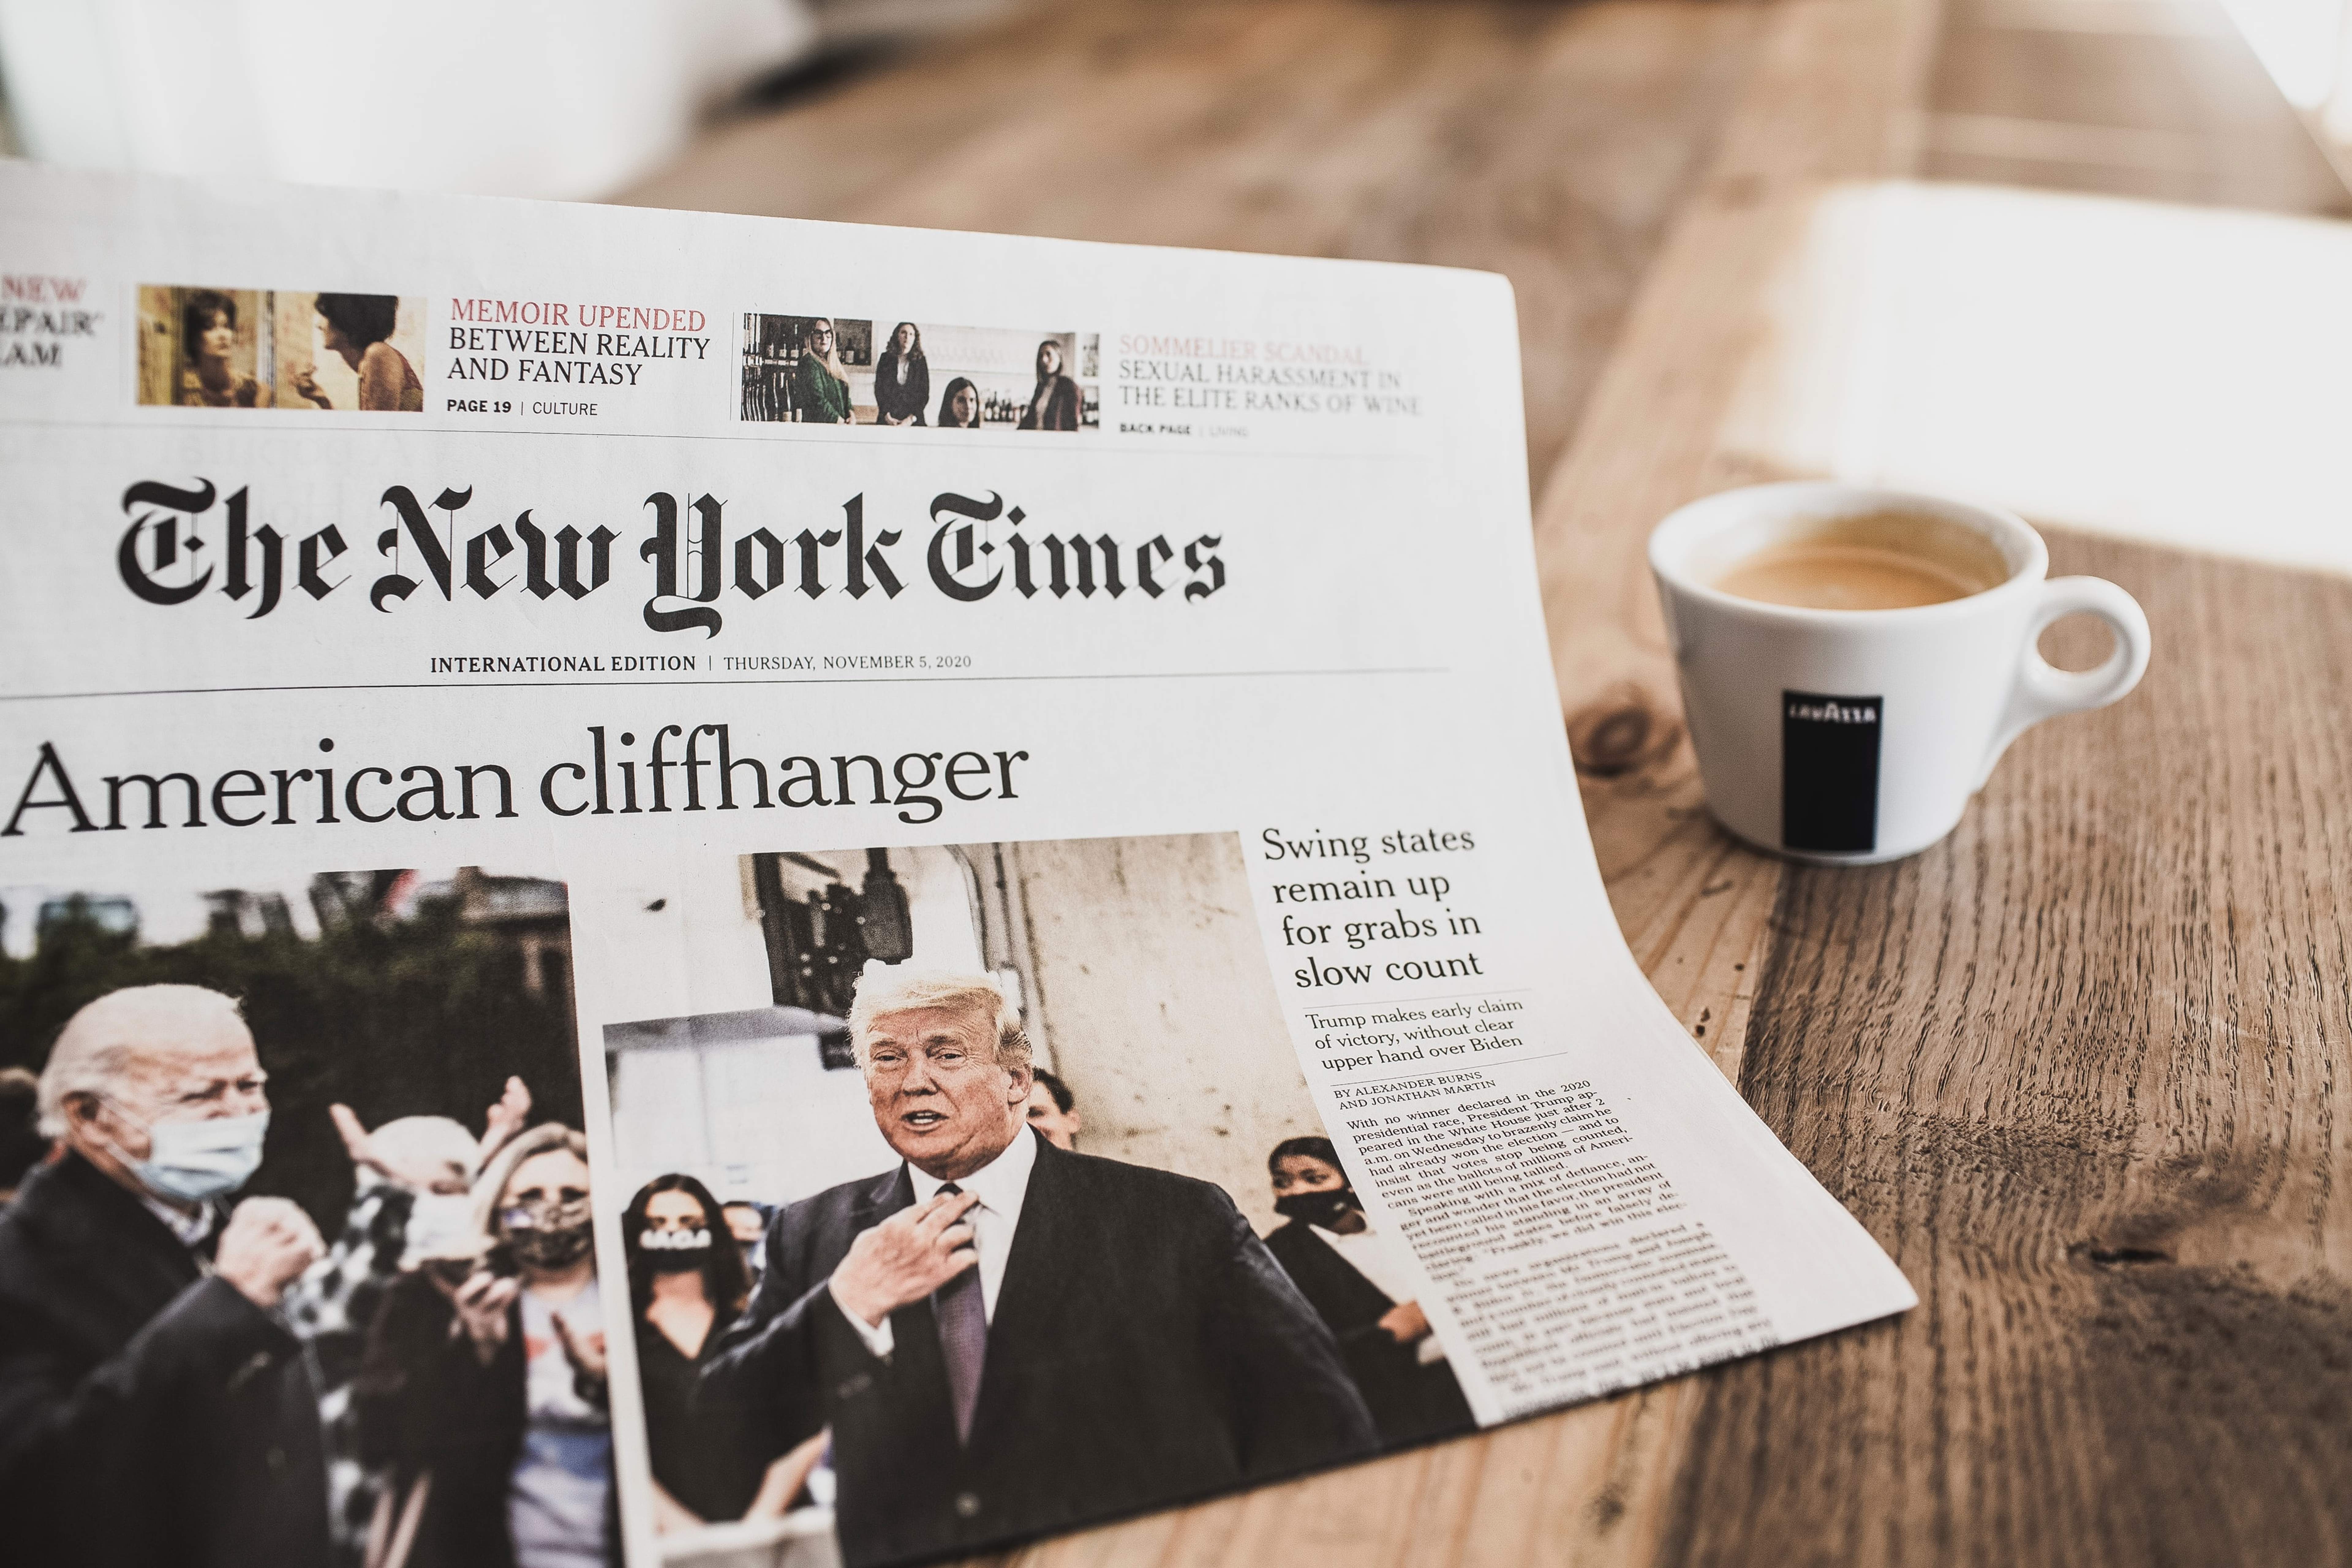 Newspaper with headline "American Cliffhanger"